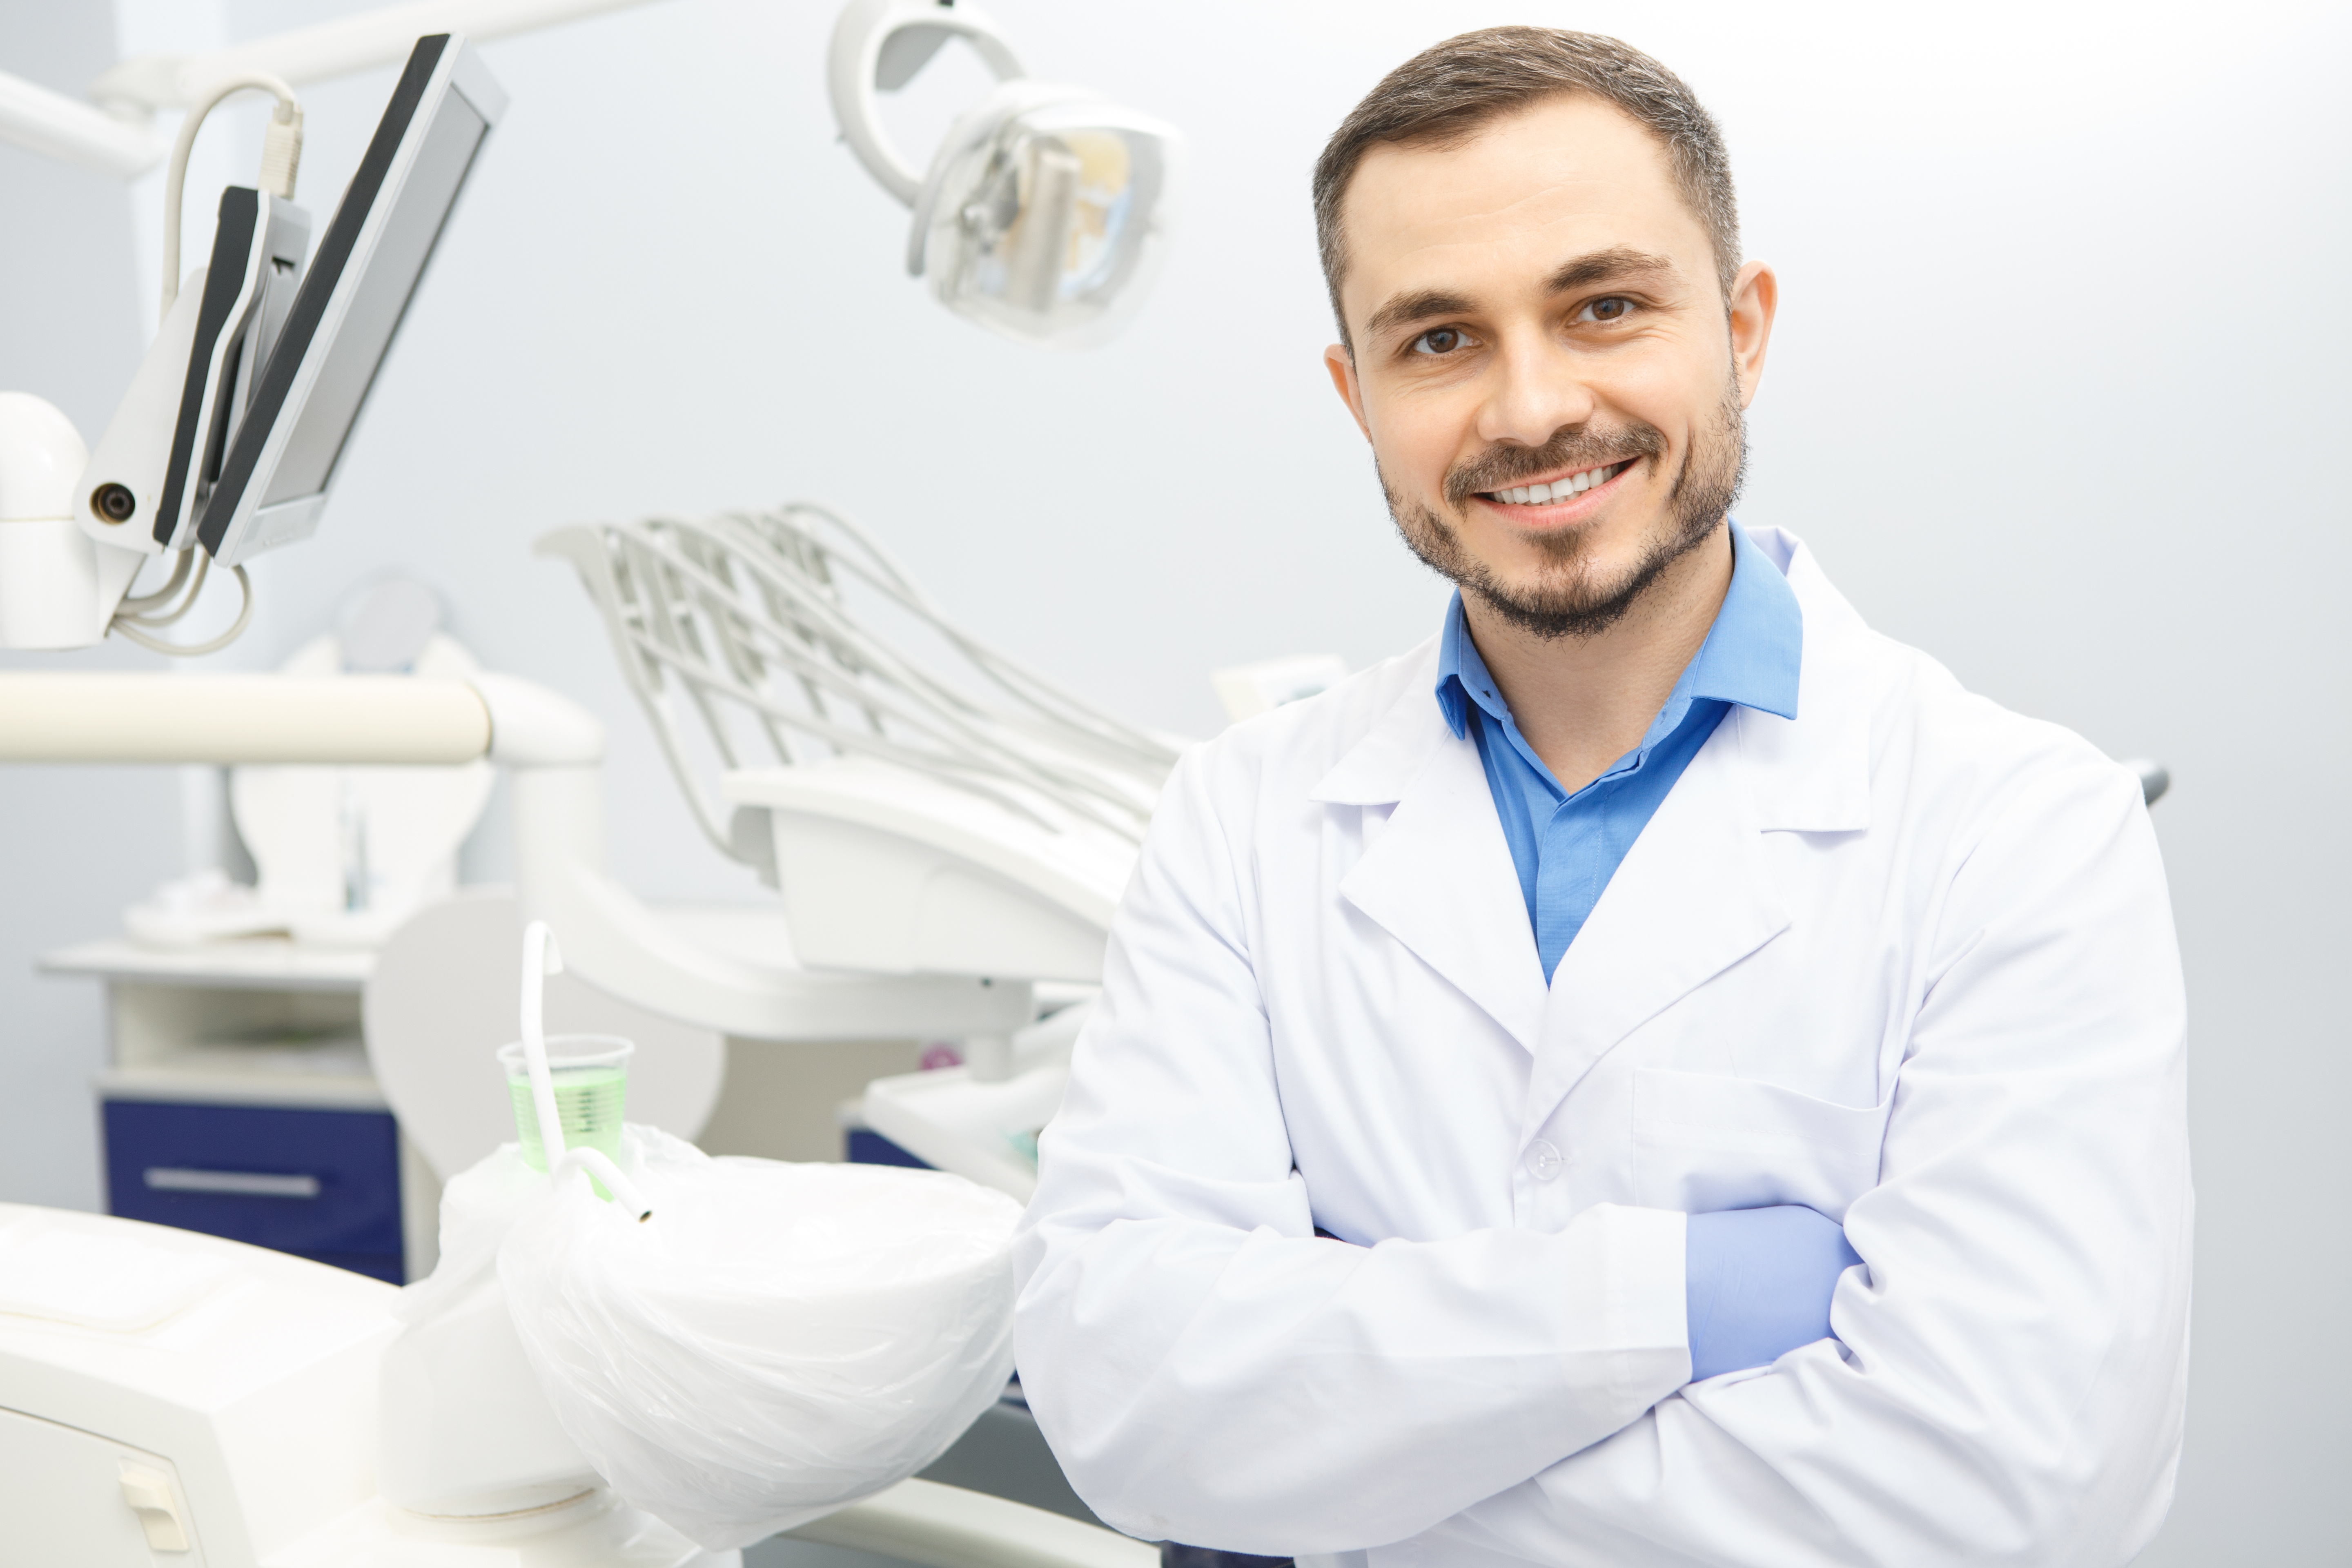 Стоматология практика врачи. Стоматолог. Стоматолог мужчина. Красивый стоматолог. Офтоматолог.